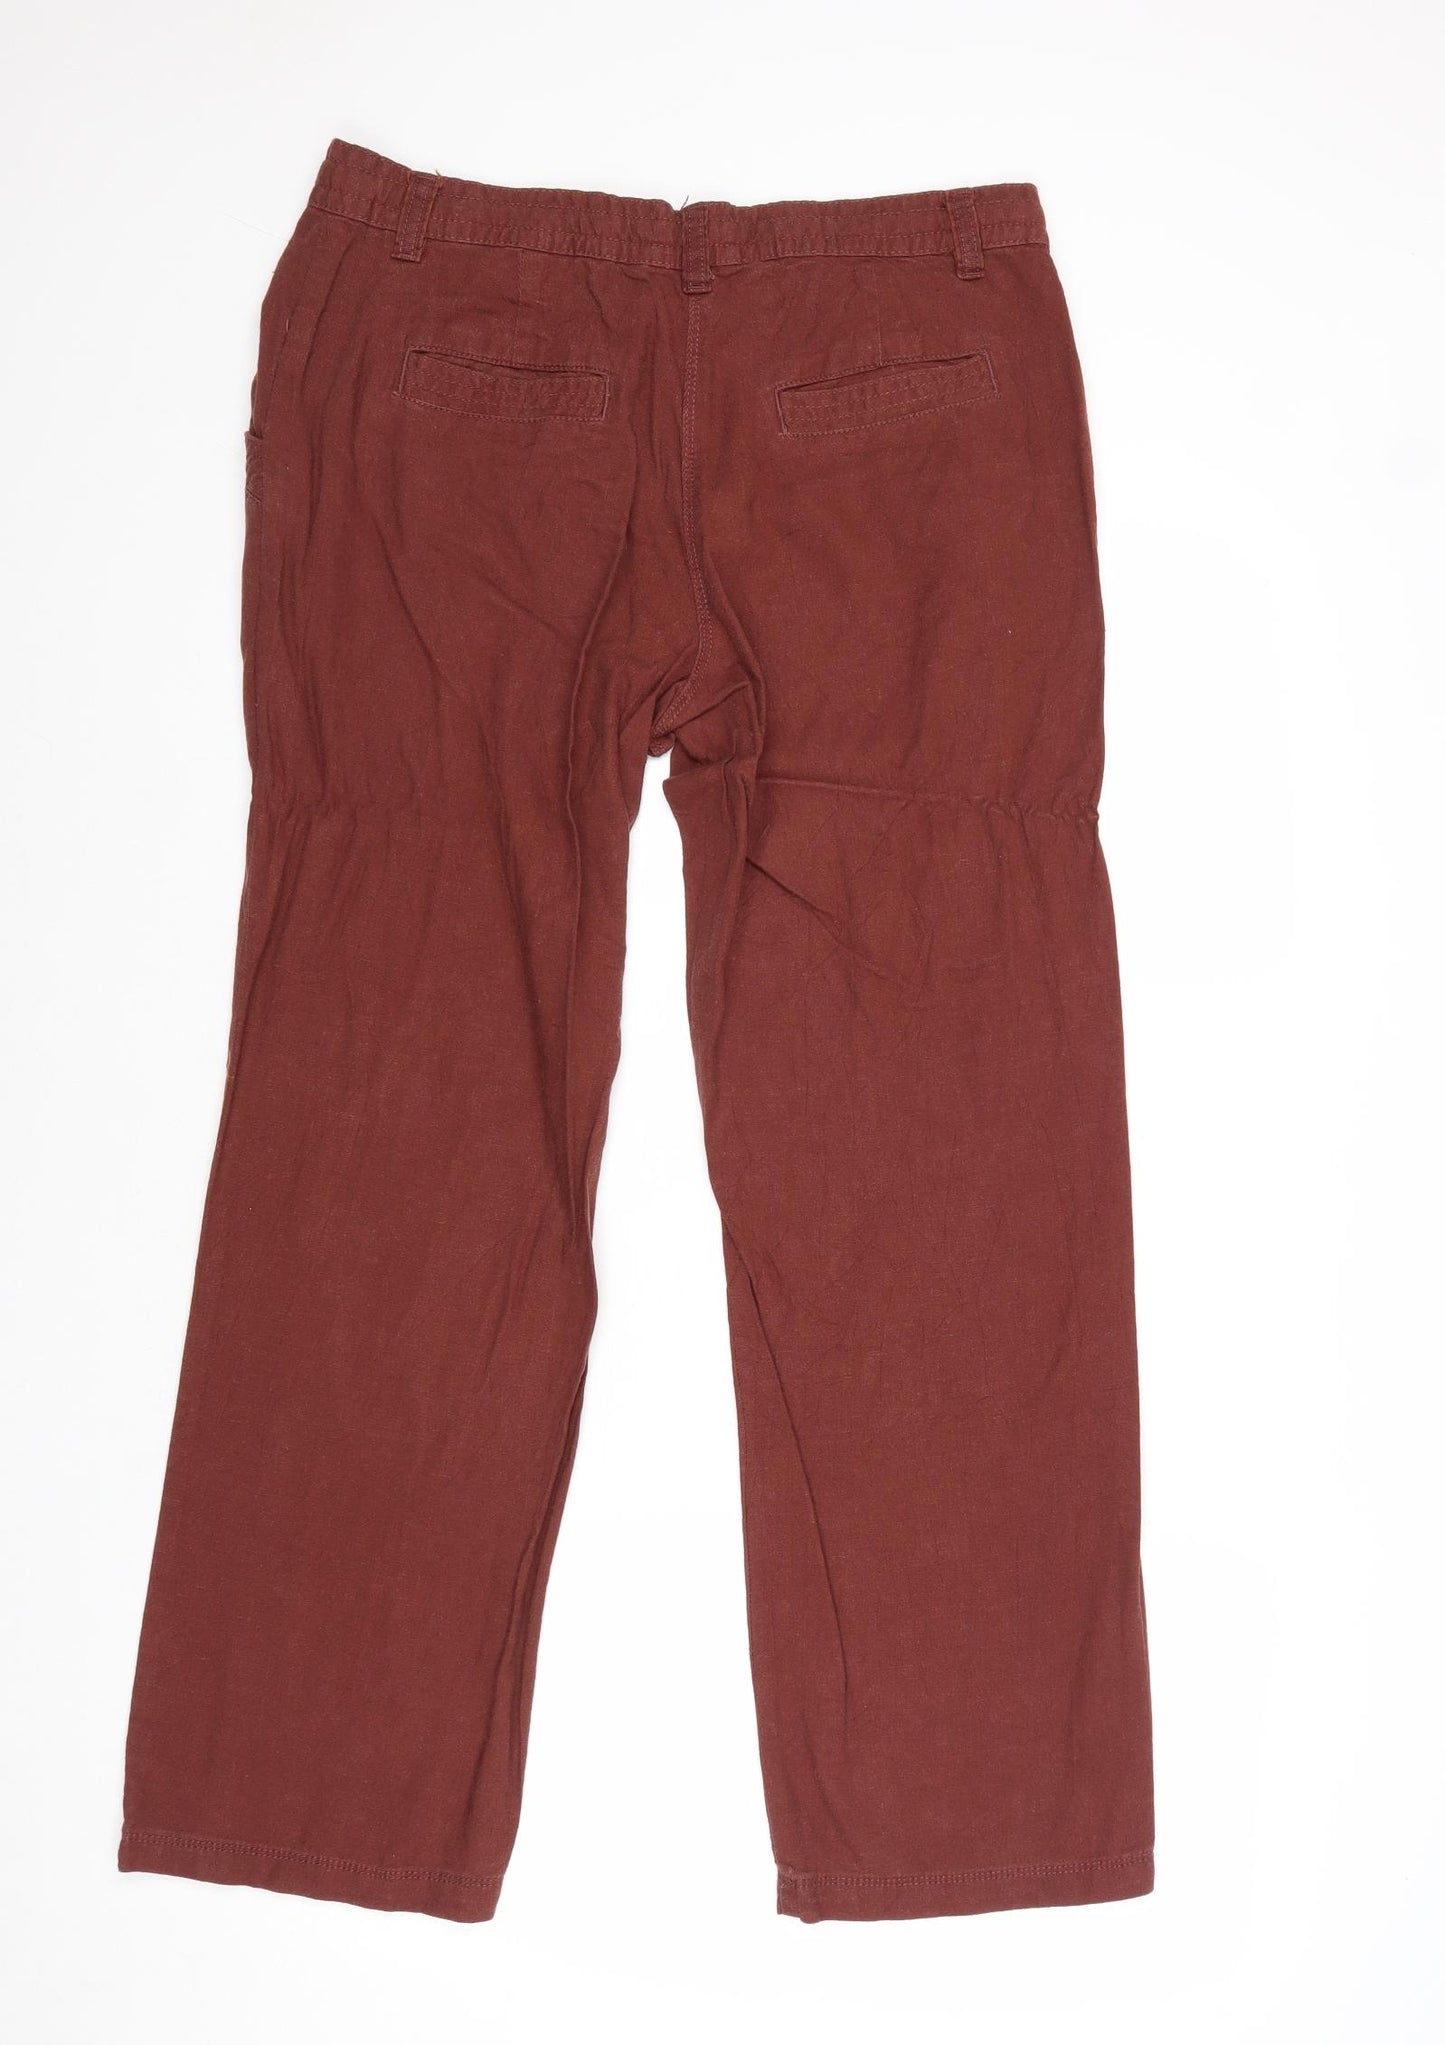 Debenhams Womens Brown Viscose Trousers Size 14 Regular Zip